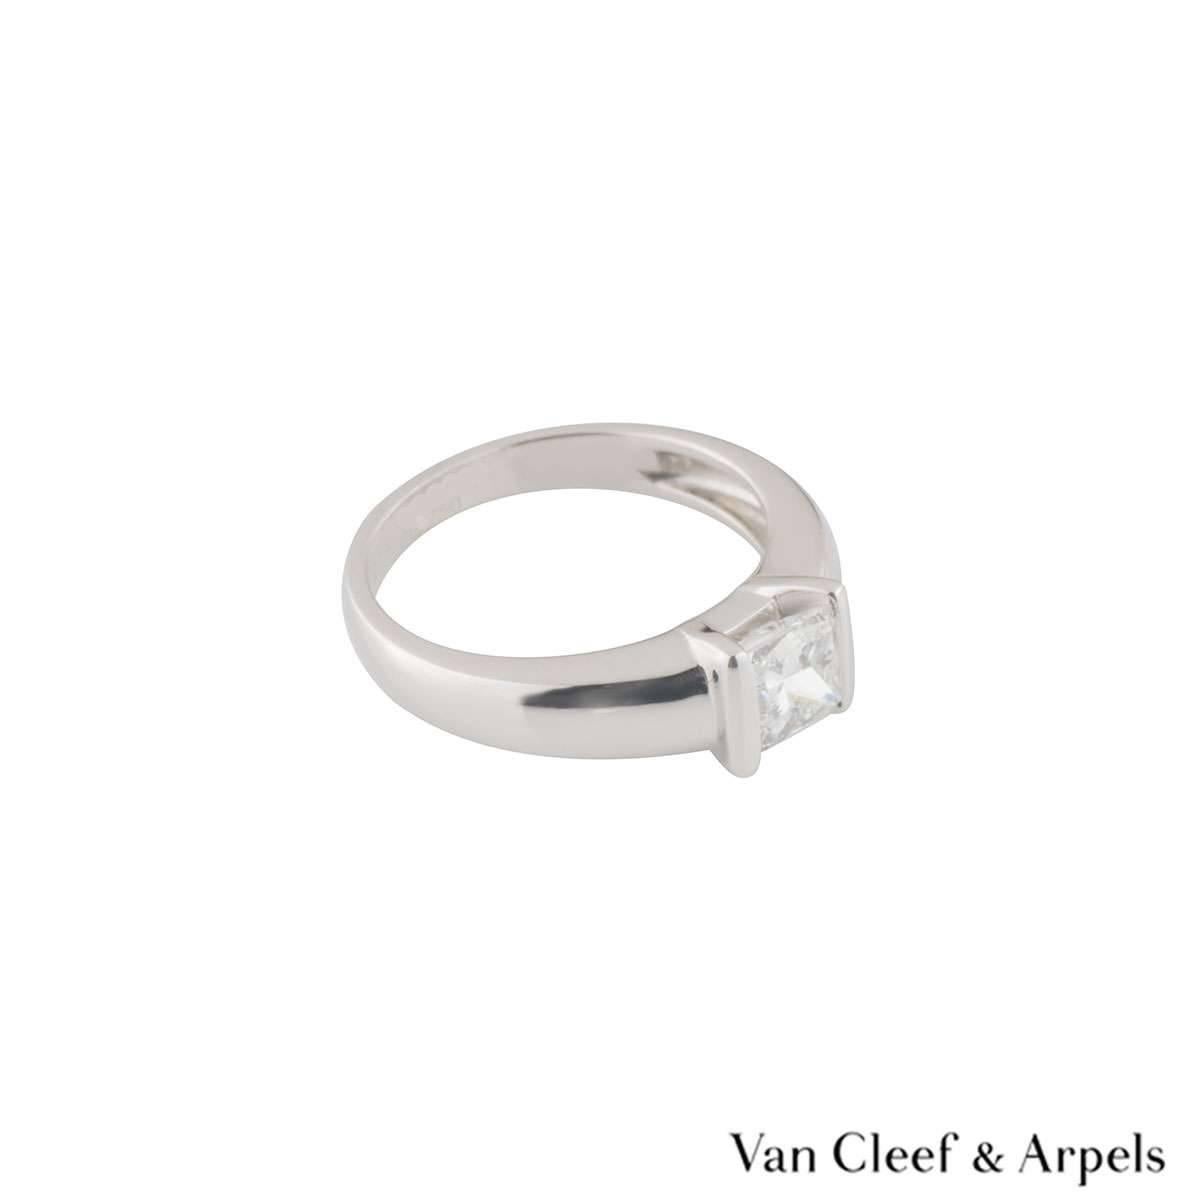 Princess Cut Van Cleef & Arpels Diamond Engagement Ring 1.01 Carat